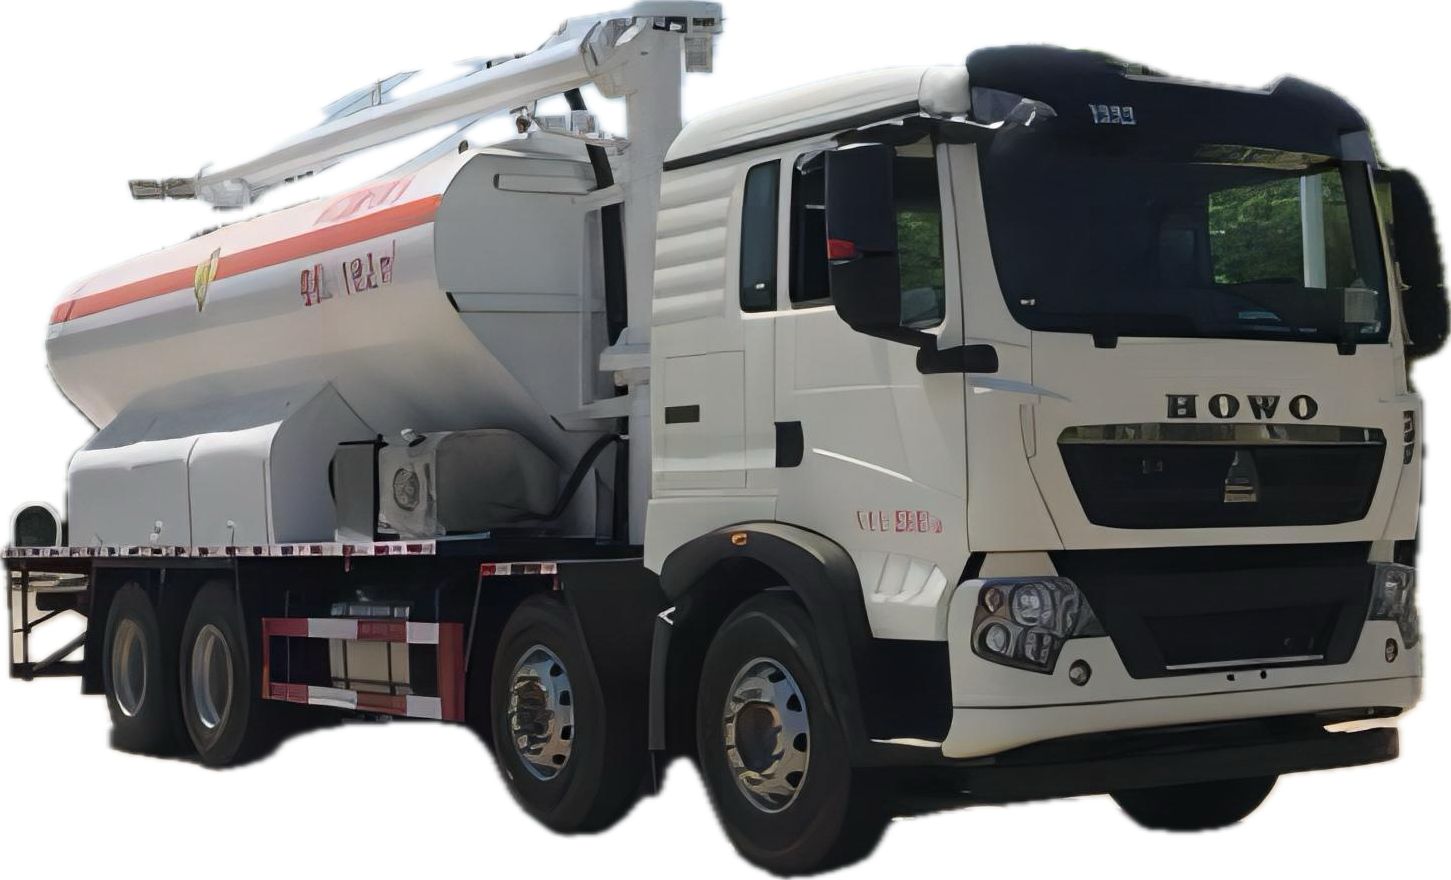  Customize Explosive Porous Granular Ammonium Nitrate ANFO Mixing Charging Truck 15 Ton